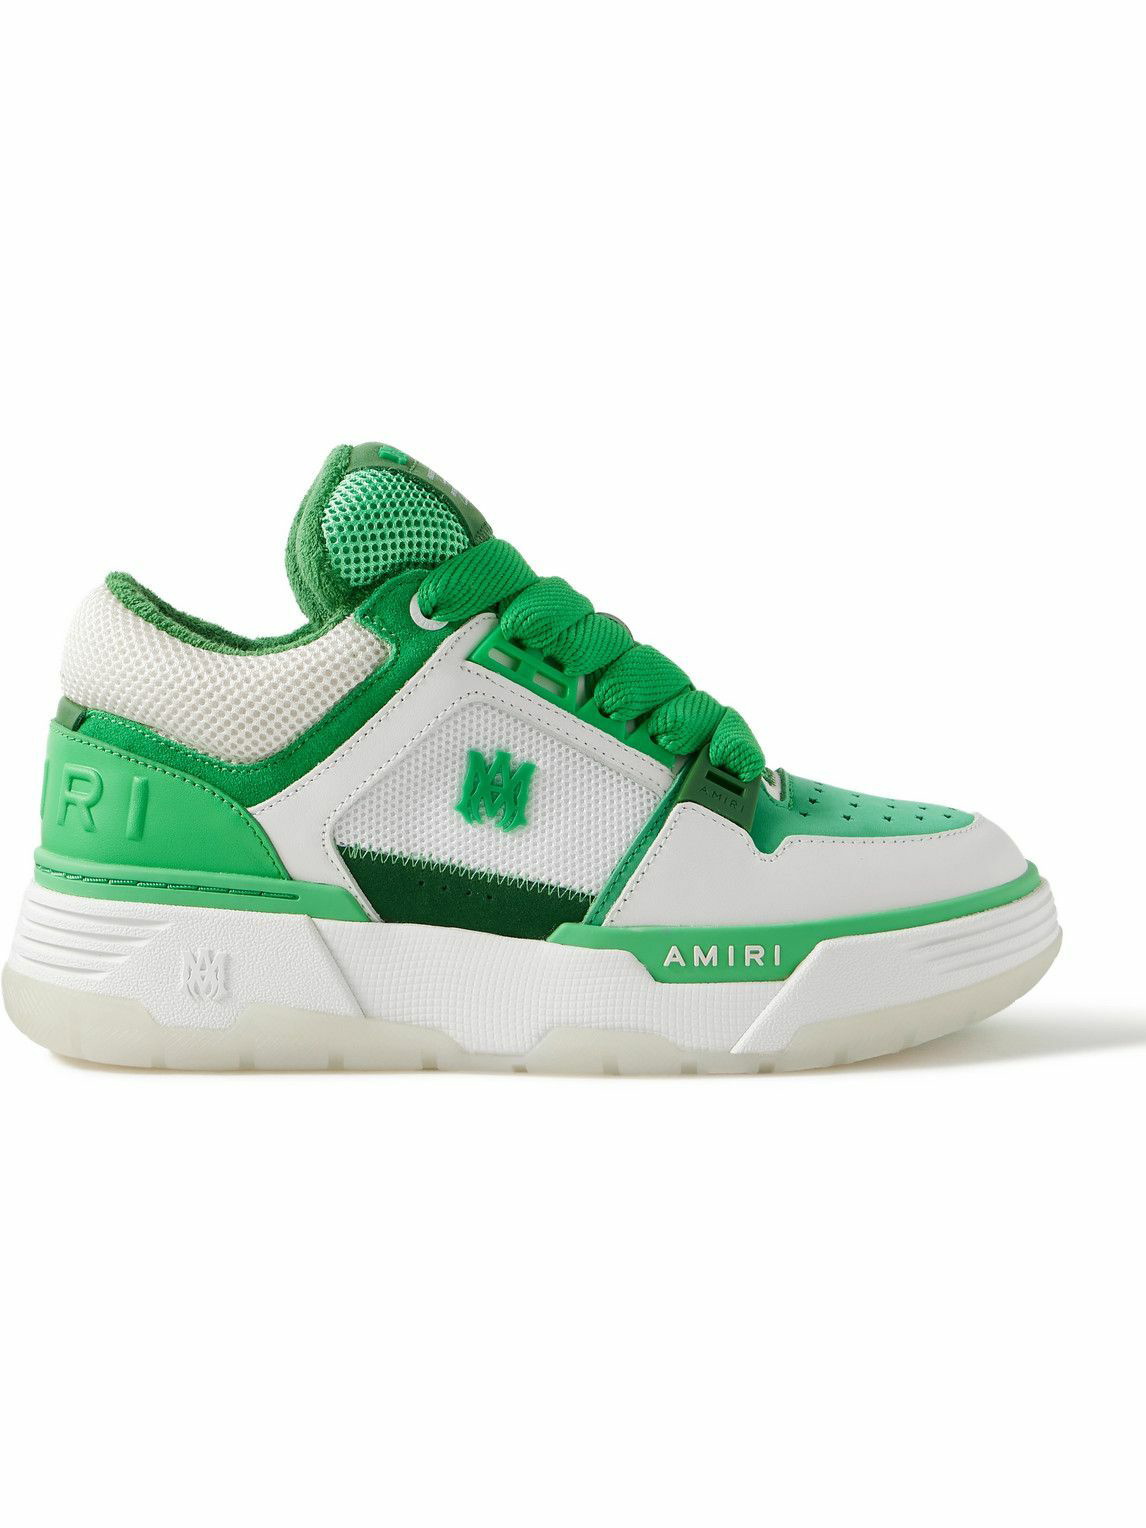 AMIRI - MA-1 Mesh, Leather and Suede Sneakers - White Amiri